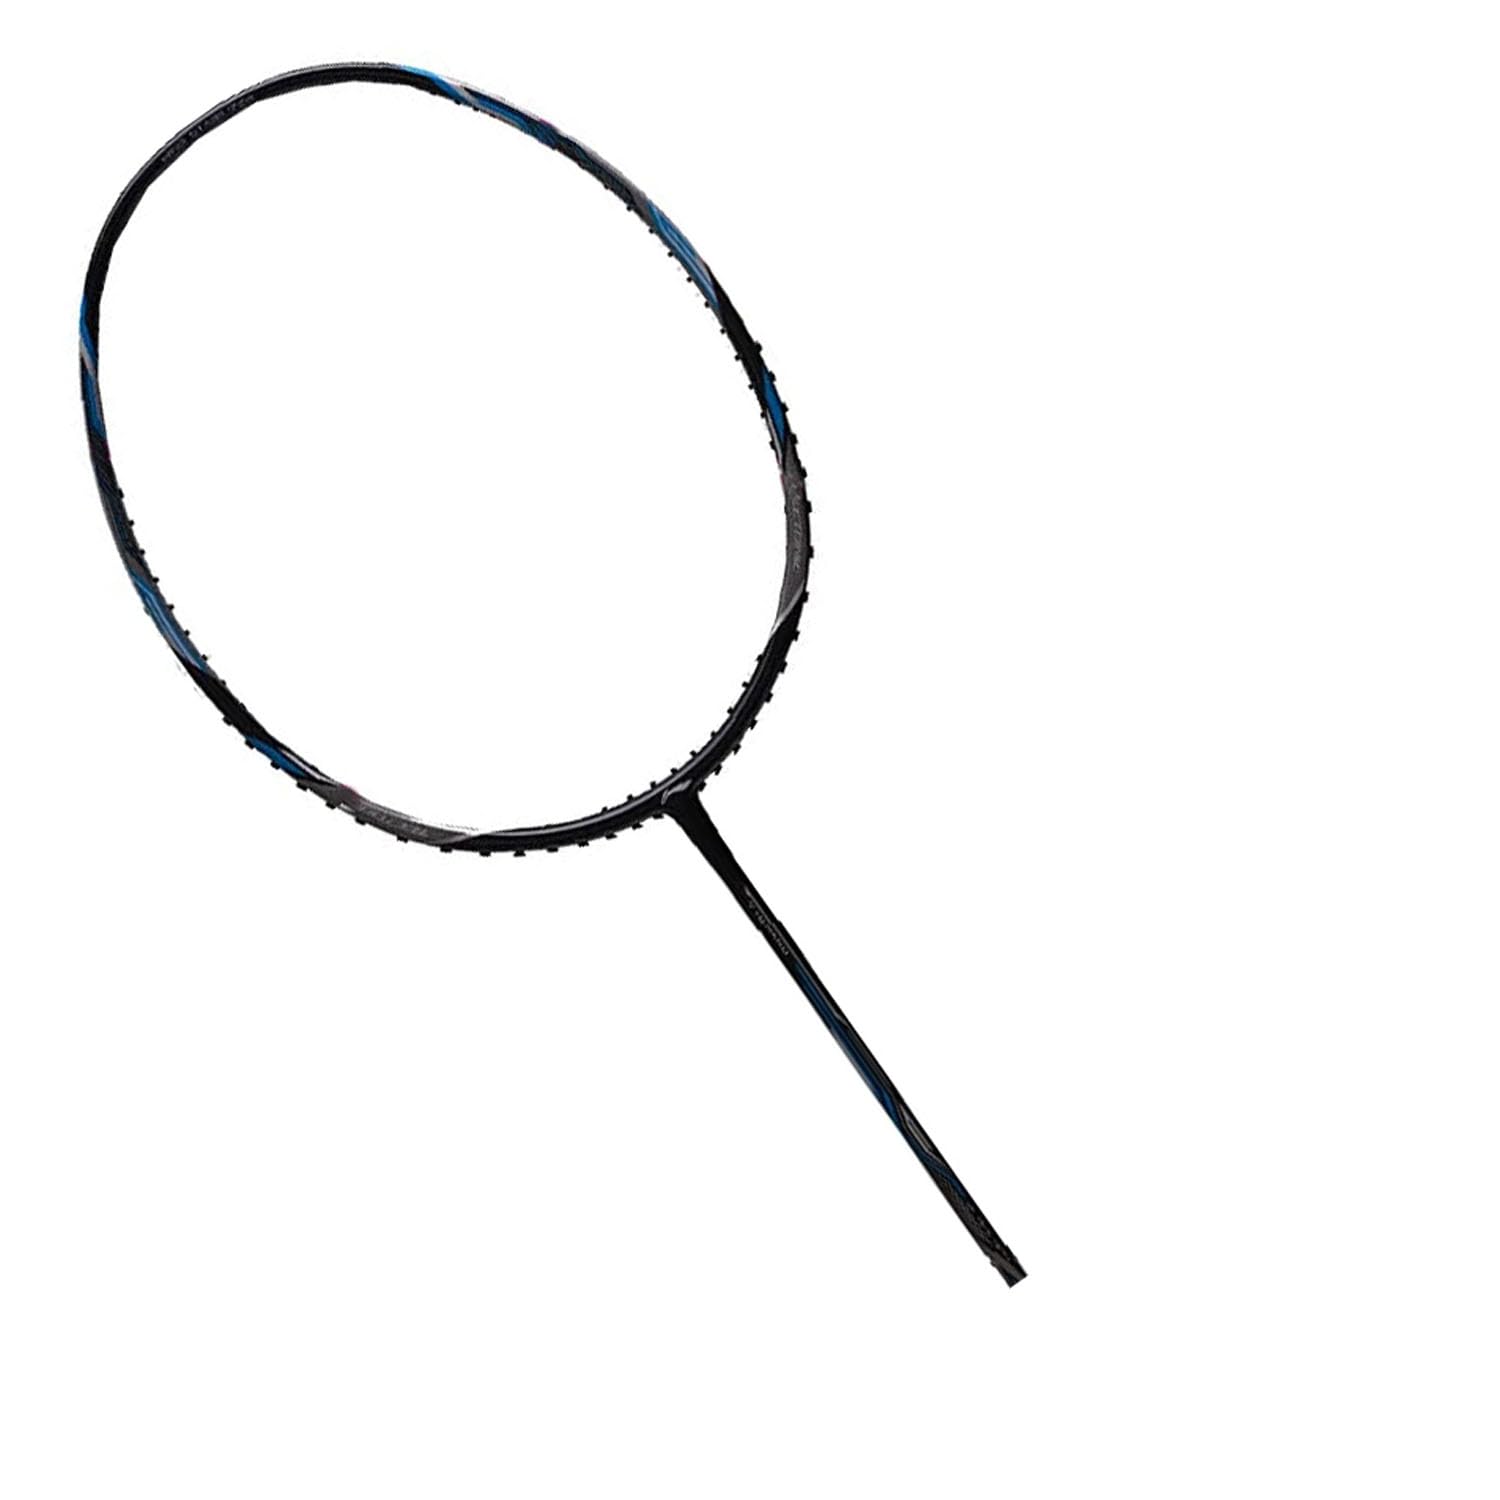 Li-Ning Tectonic 3R Unstrung Badminton Racket, Black/Silver/Blue - Best Price online Prokicksports.com